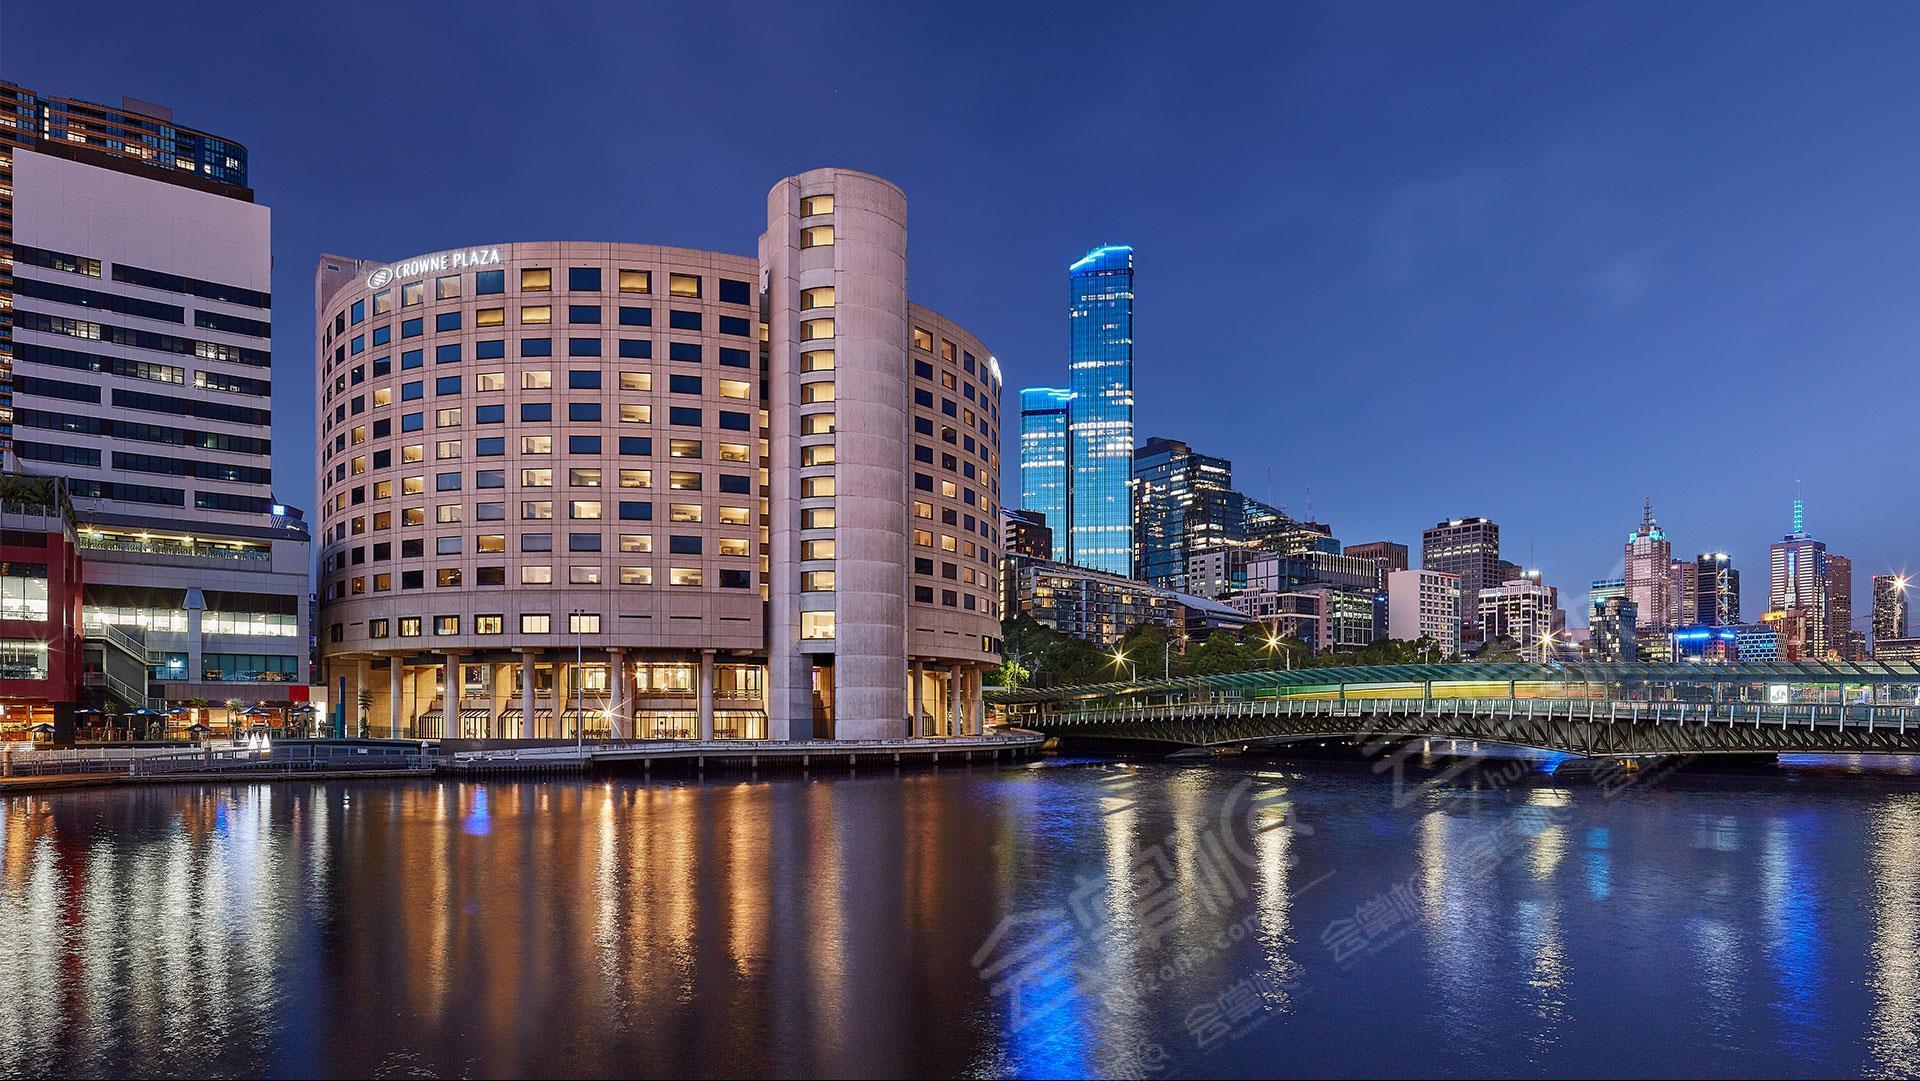 Crowne Plaza Hotel Melbourne - Pearl Riverfront